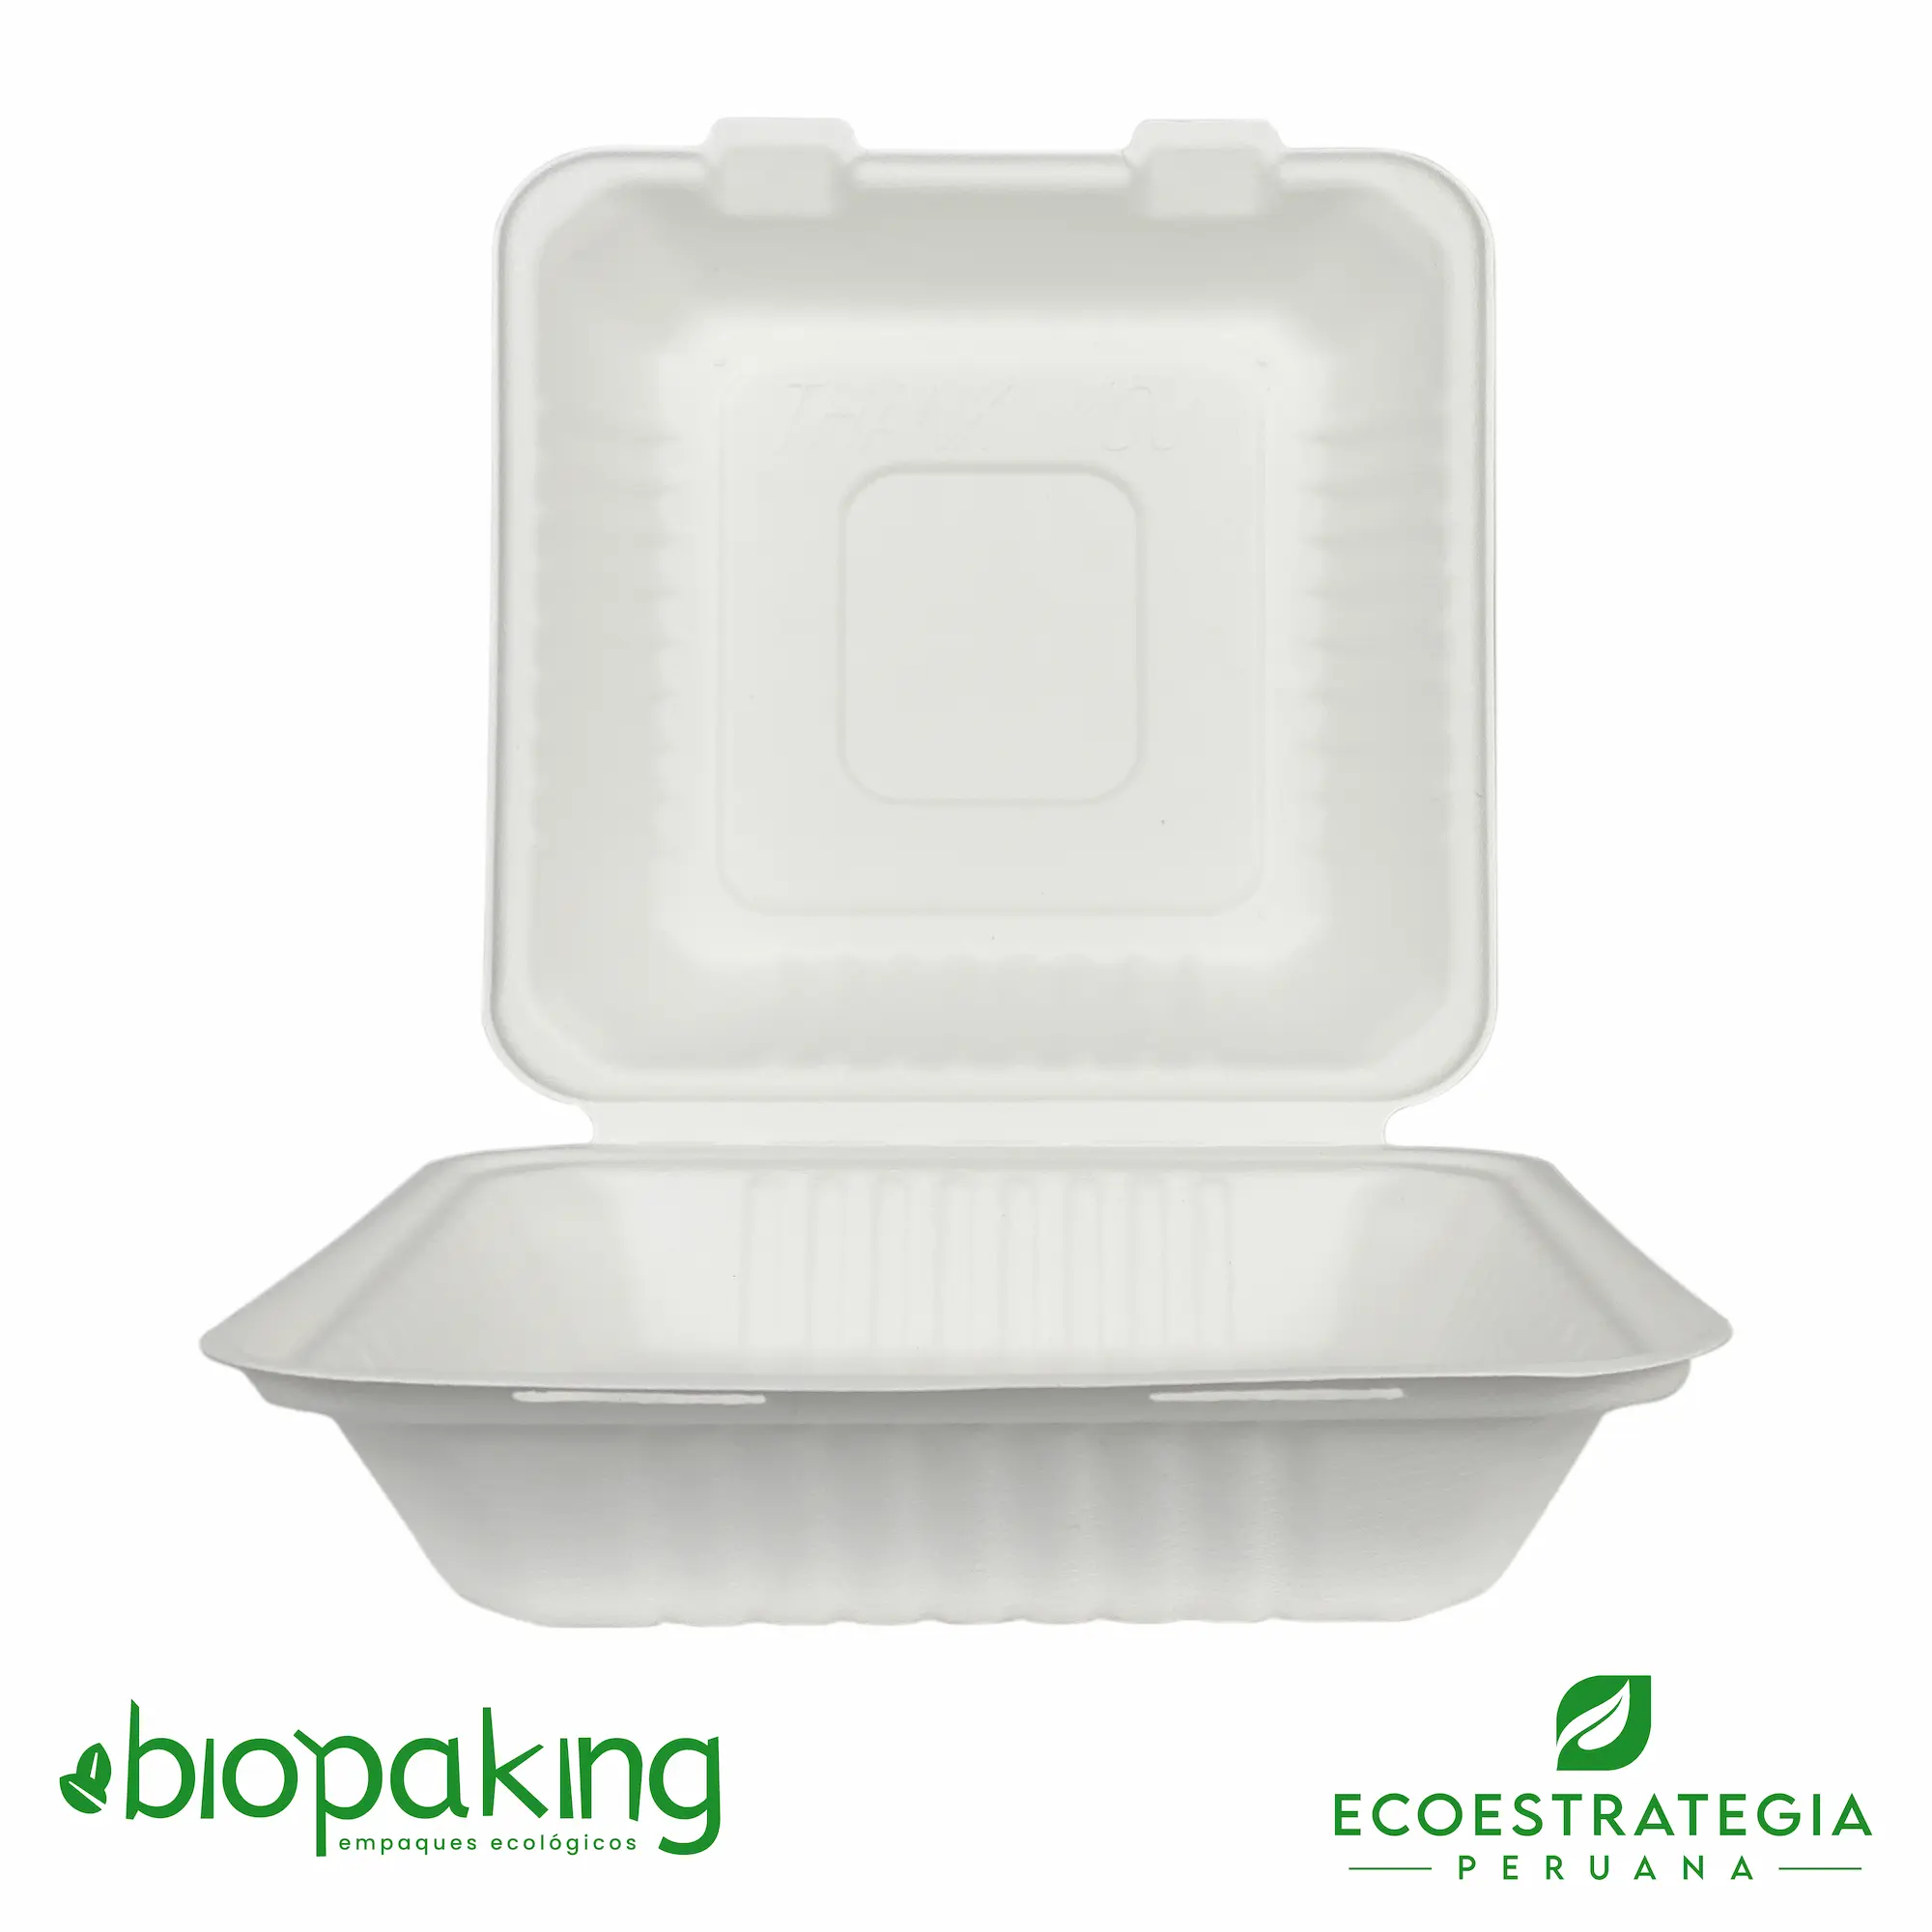 Eco Estrategia Peruana: Envases biodegradables CT3